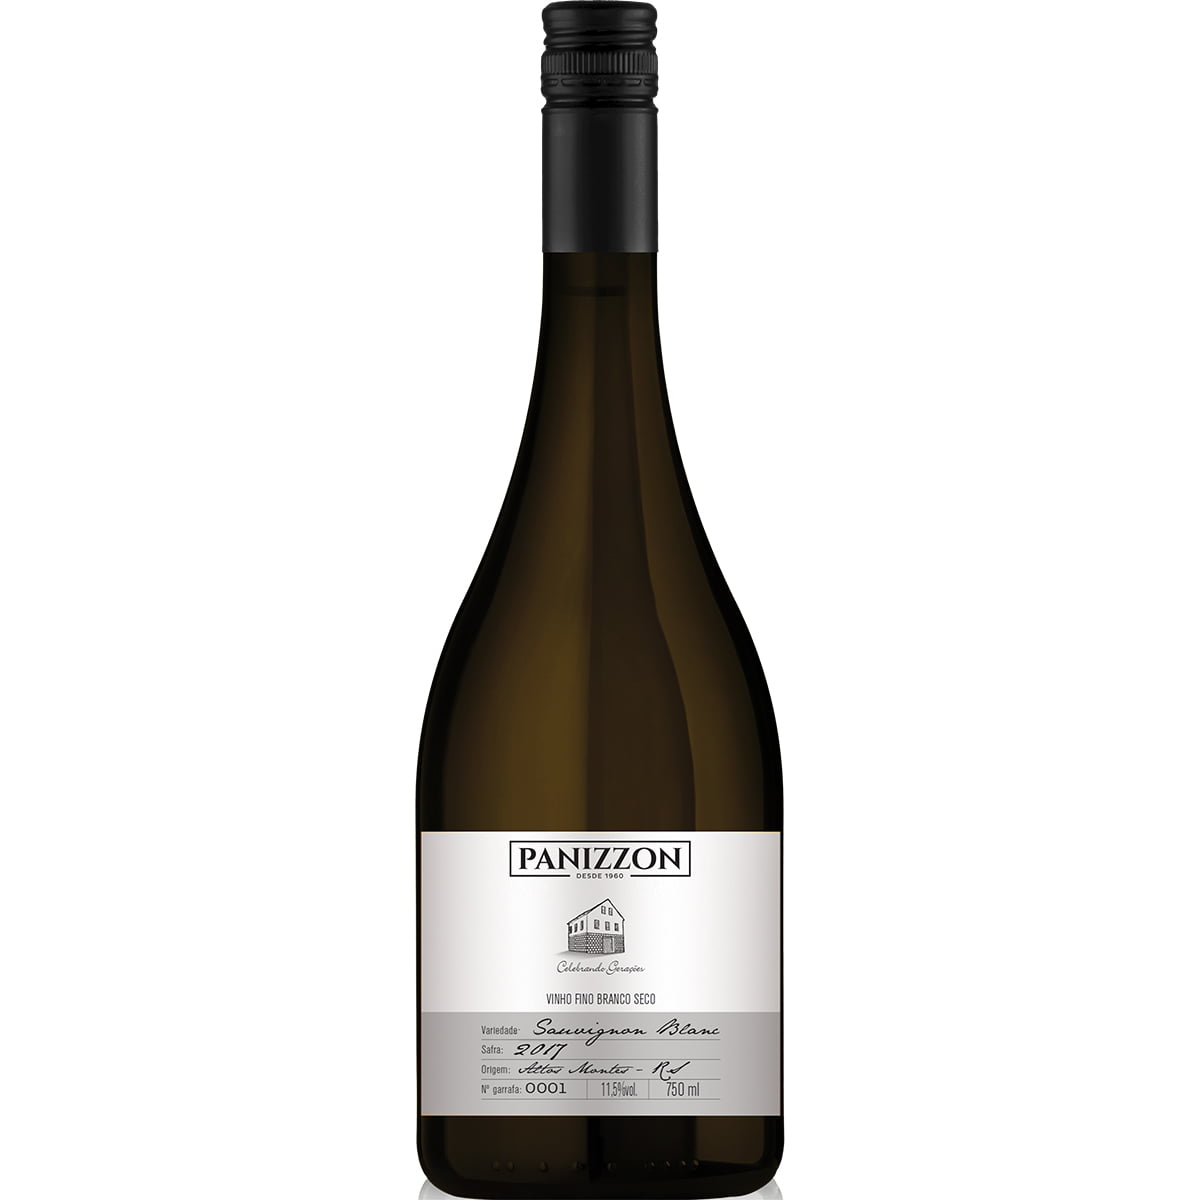 Panizzon Sauvignon Blanc Vinho Branco Seco 750ml